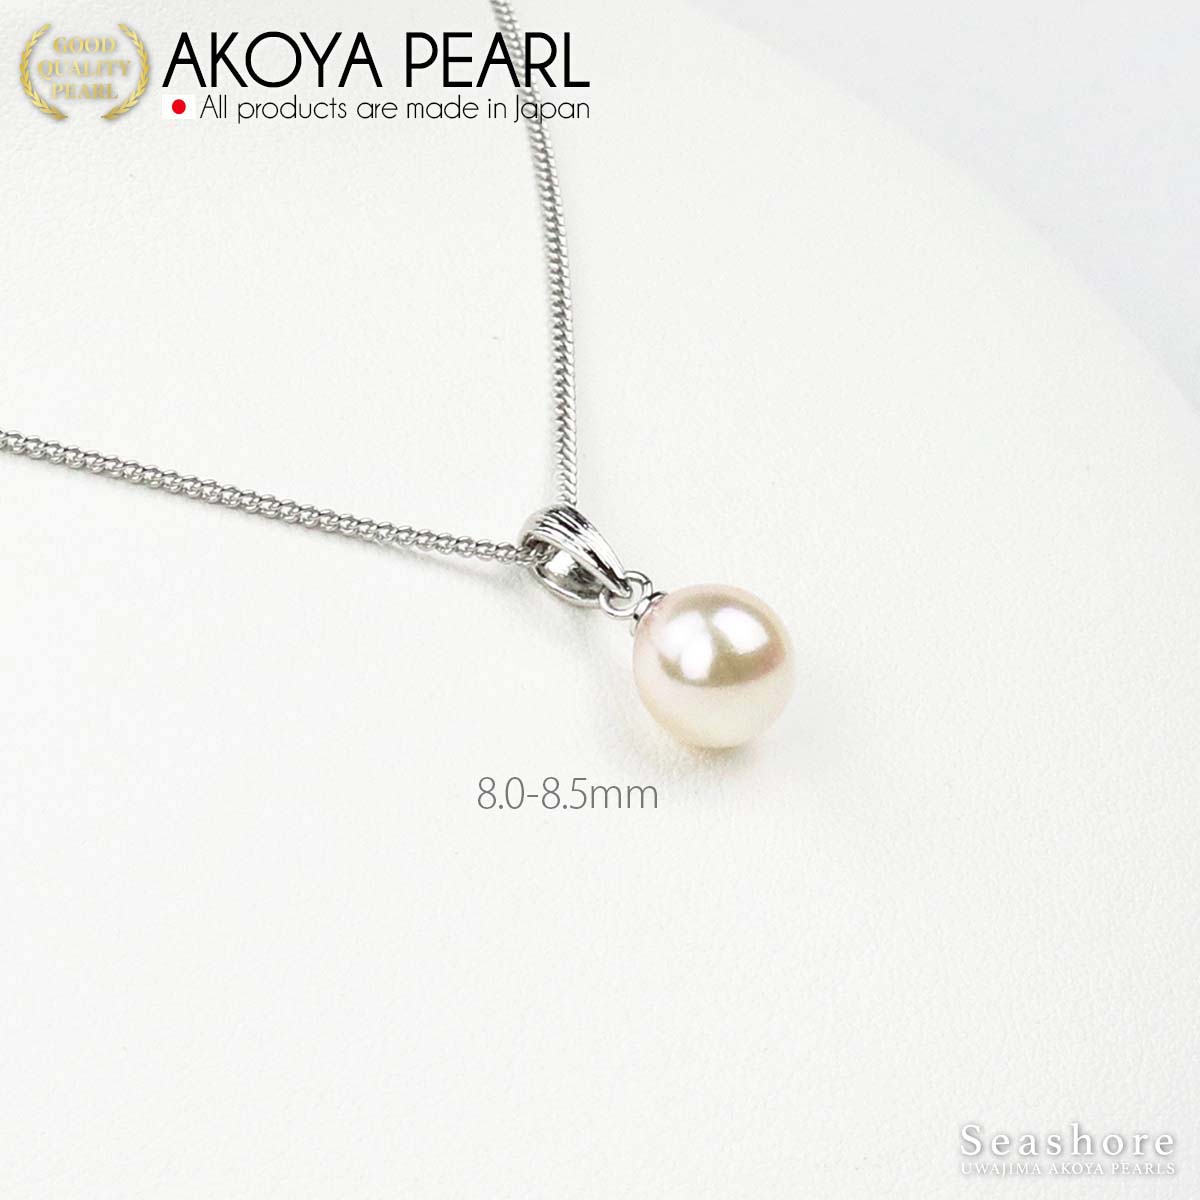 Akoya 珍珠梵蒂冈吊坠 [8.0-8.5mm] 黄铜铑/金 Akoya 珍珠珍珠项链 [2 种颜色]